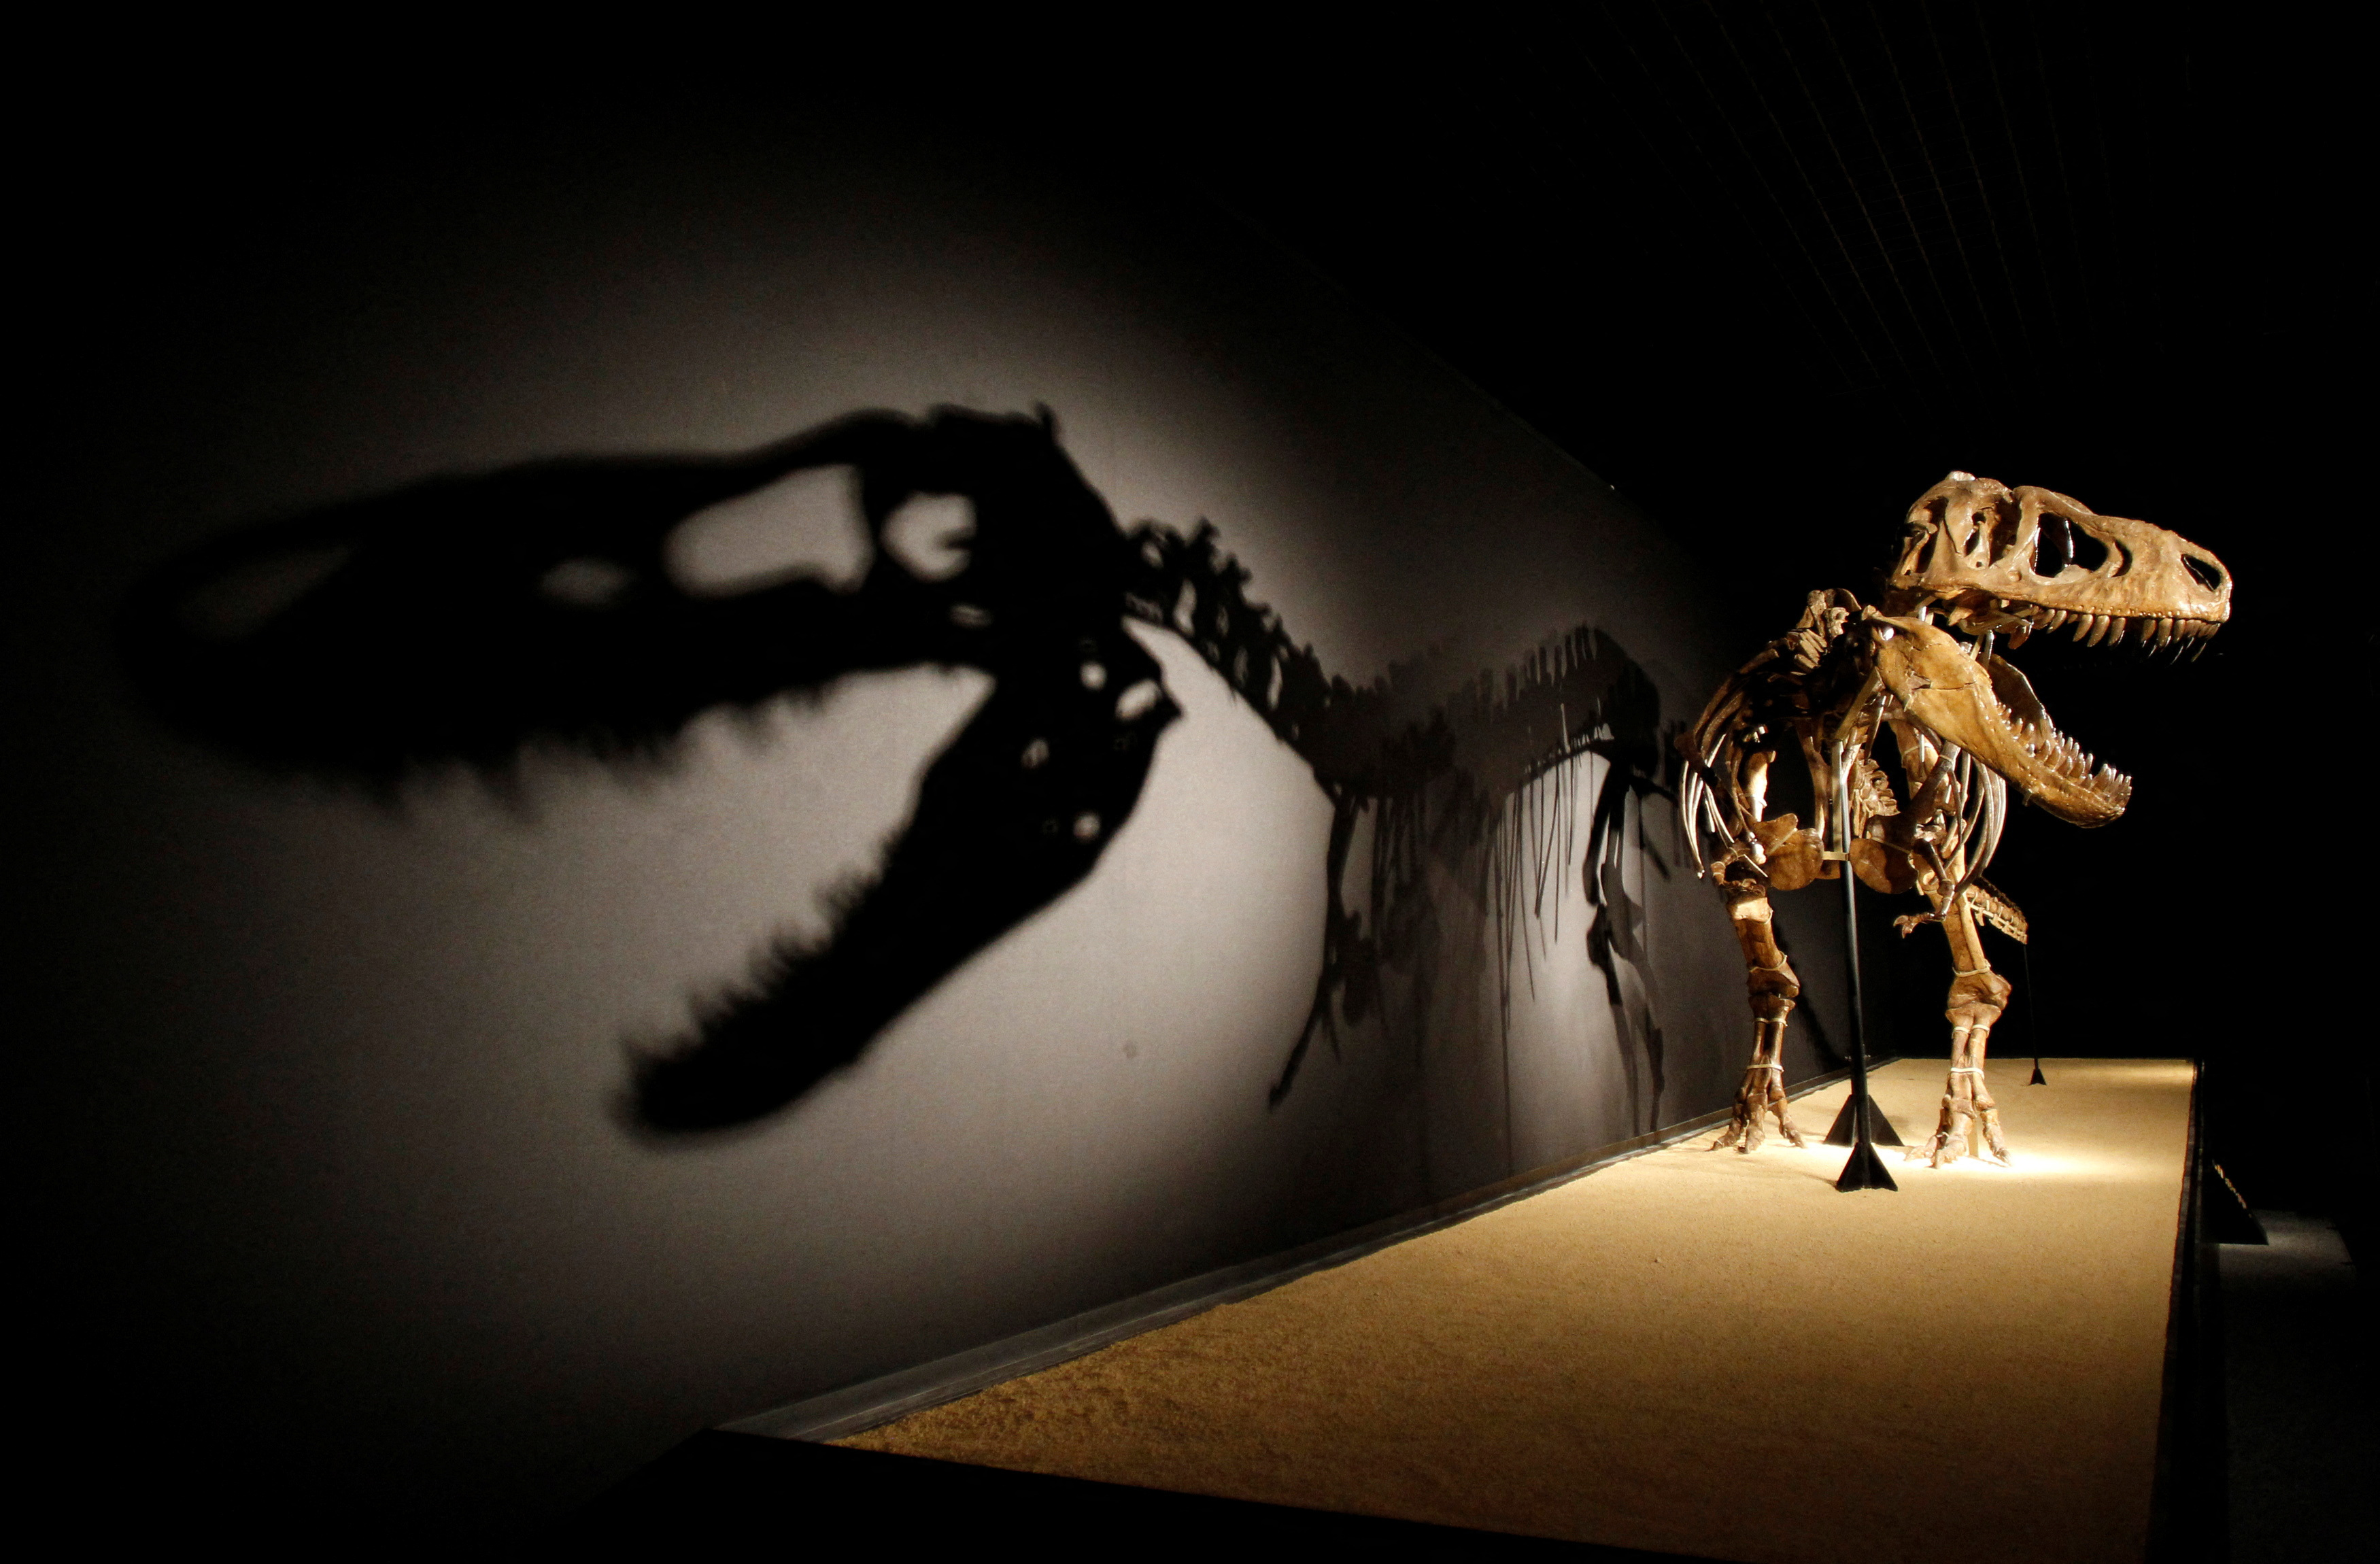 A Tarbosaurus dinosaur skeleton is displayed during an exhibition 